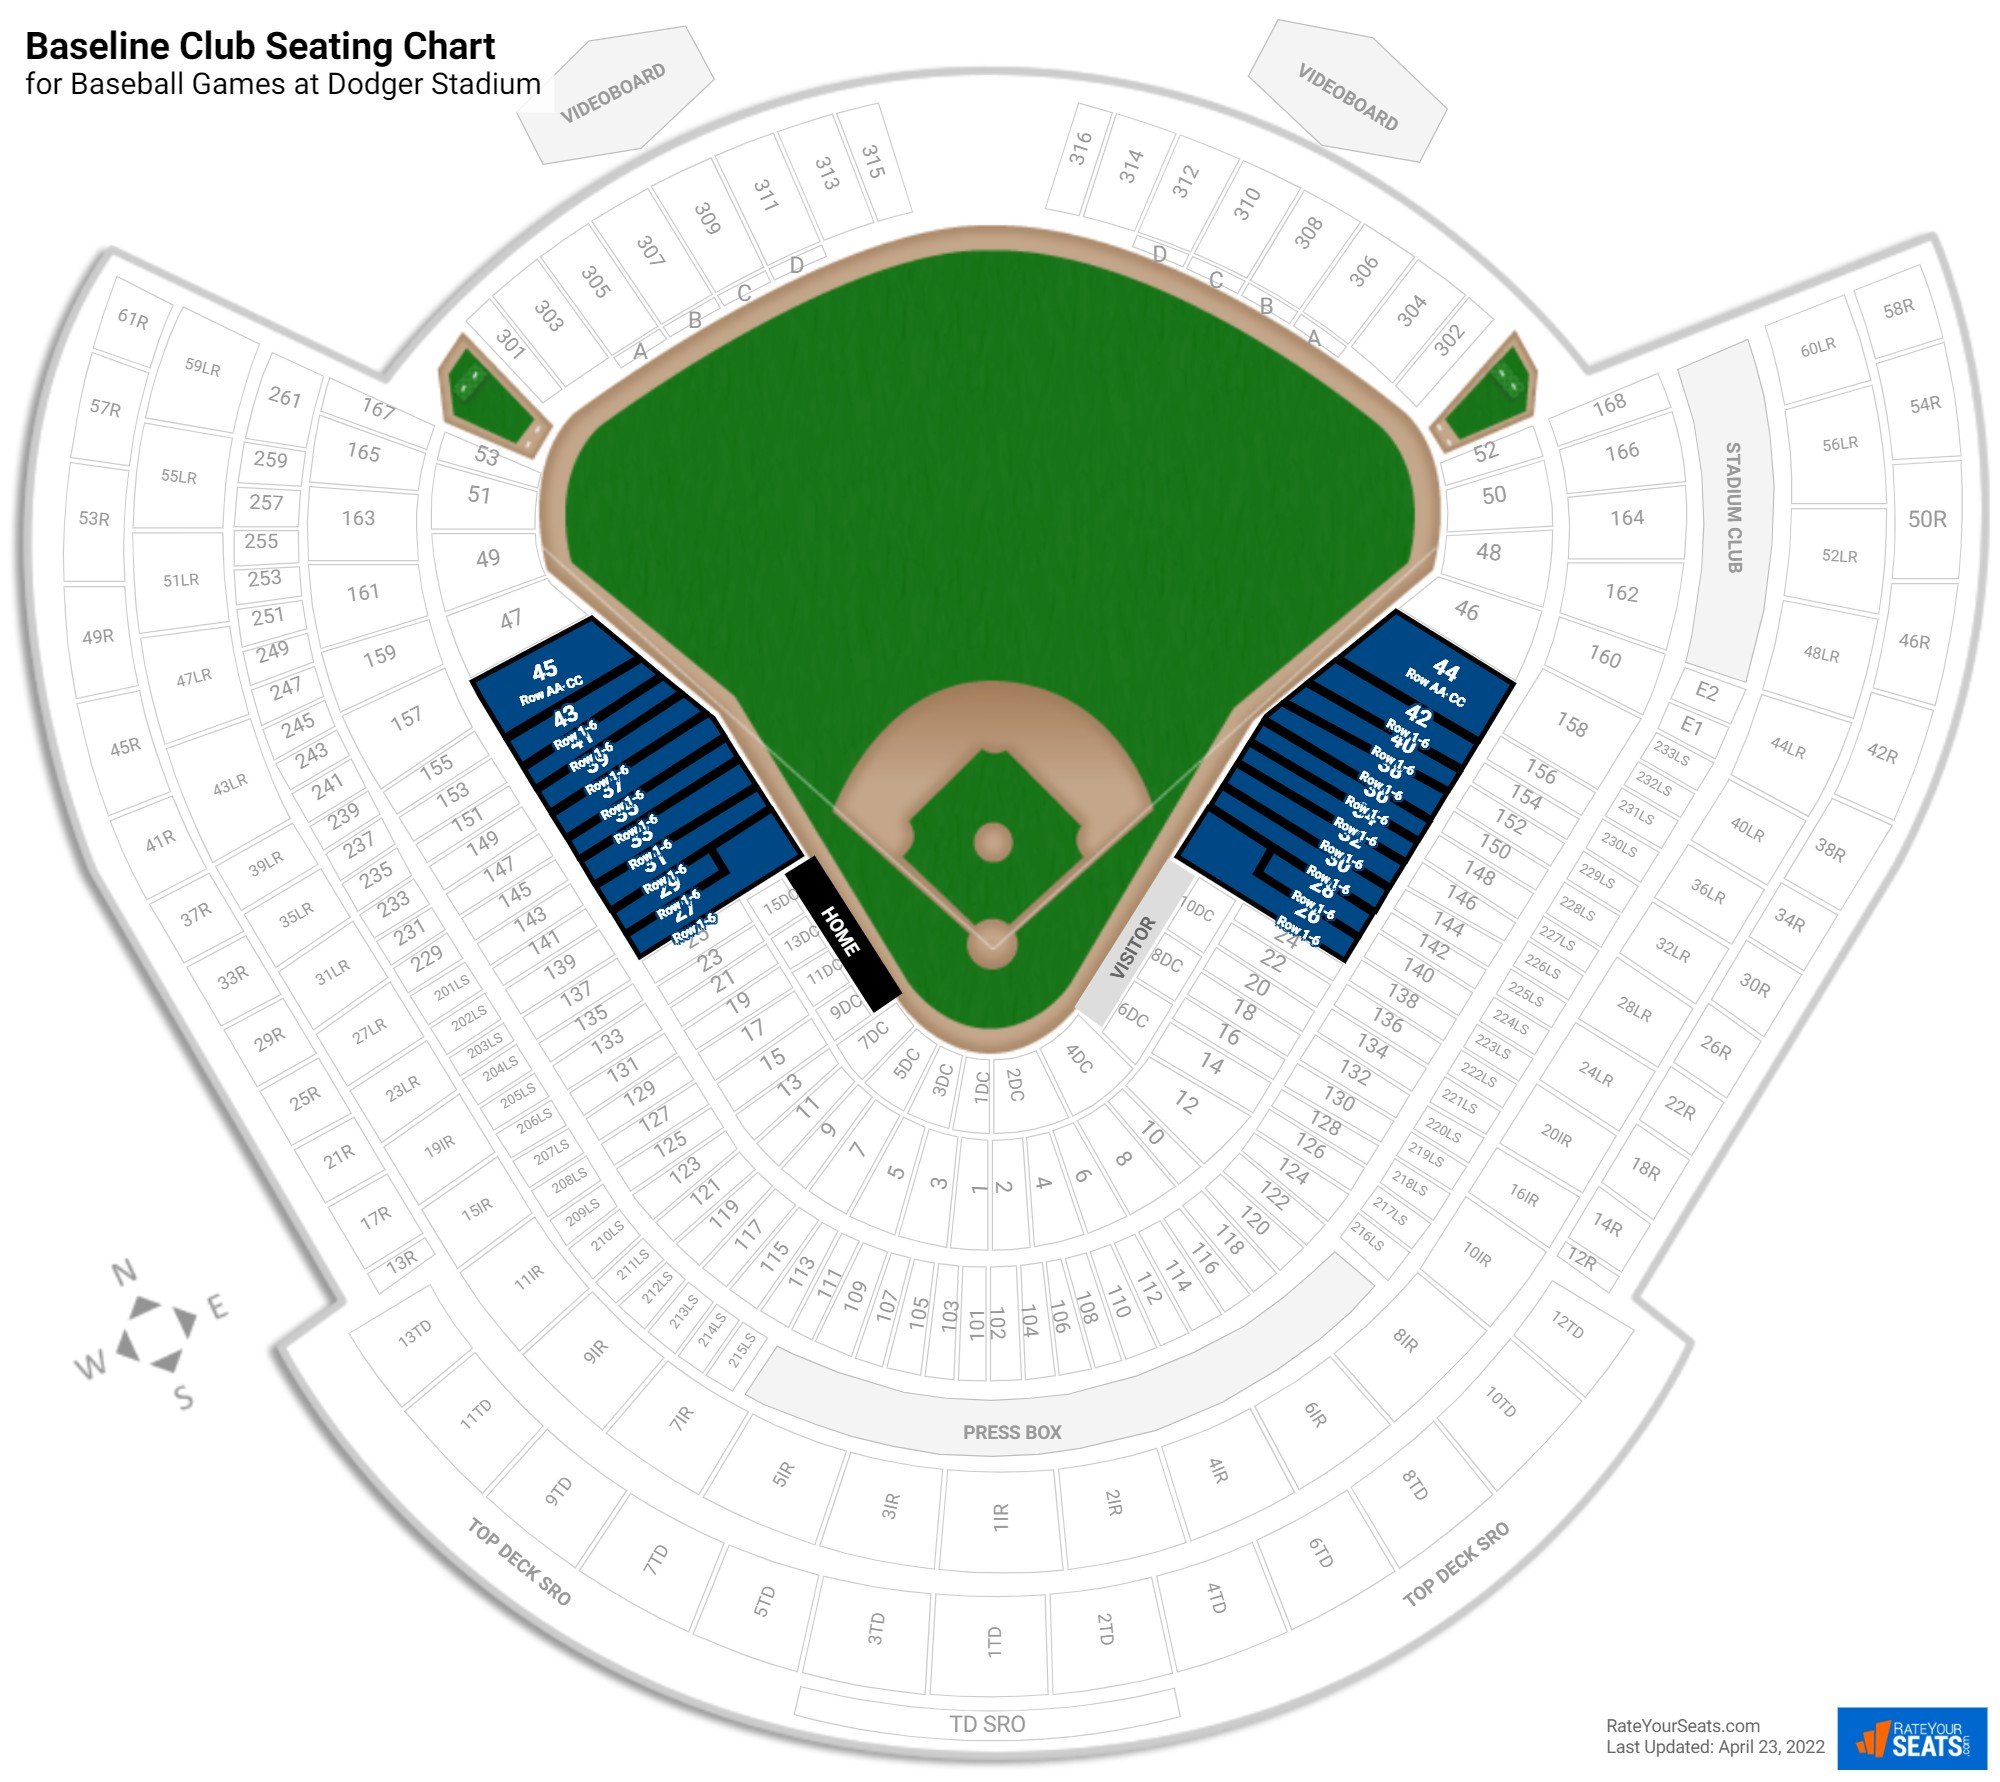 Baseball Baseline Club Seating Chart at Dodger Stadium